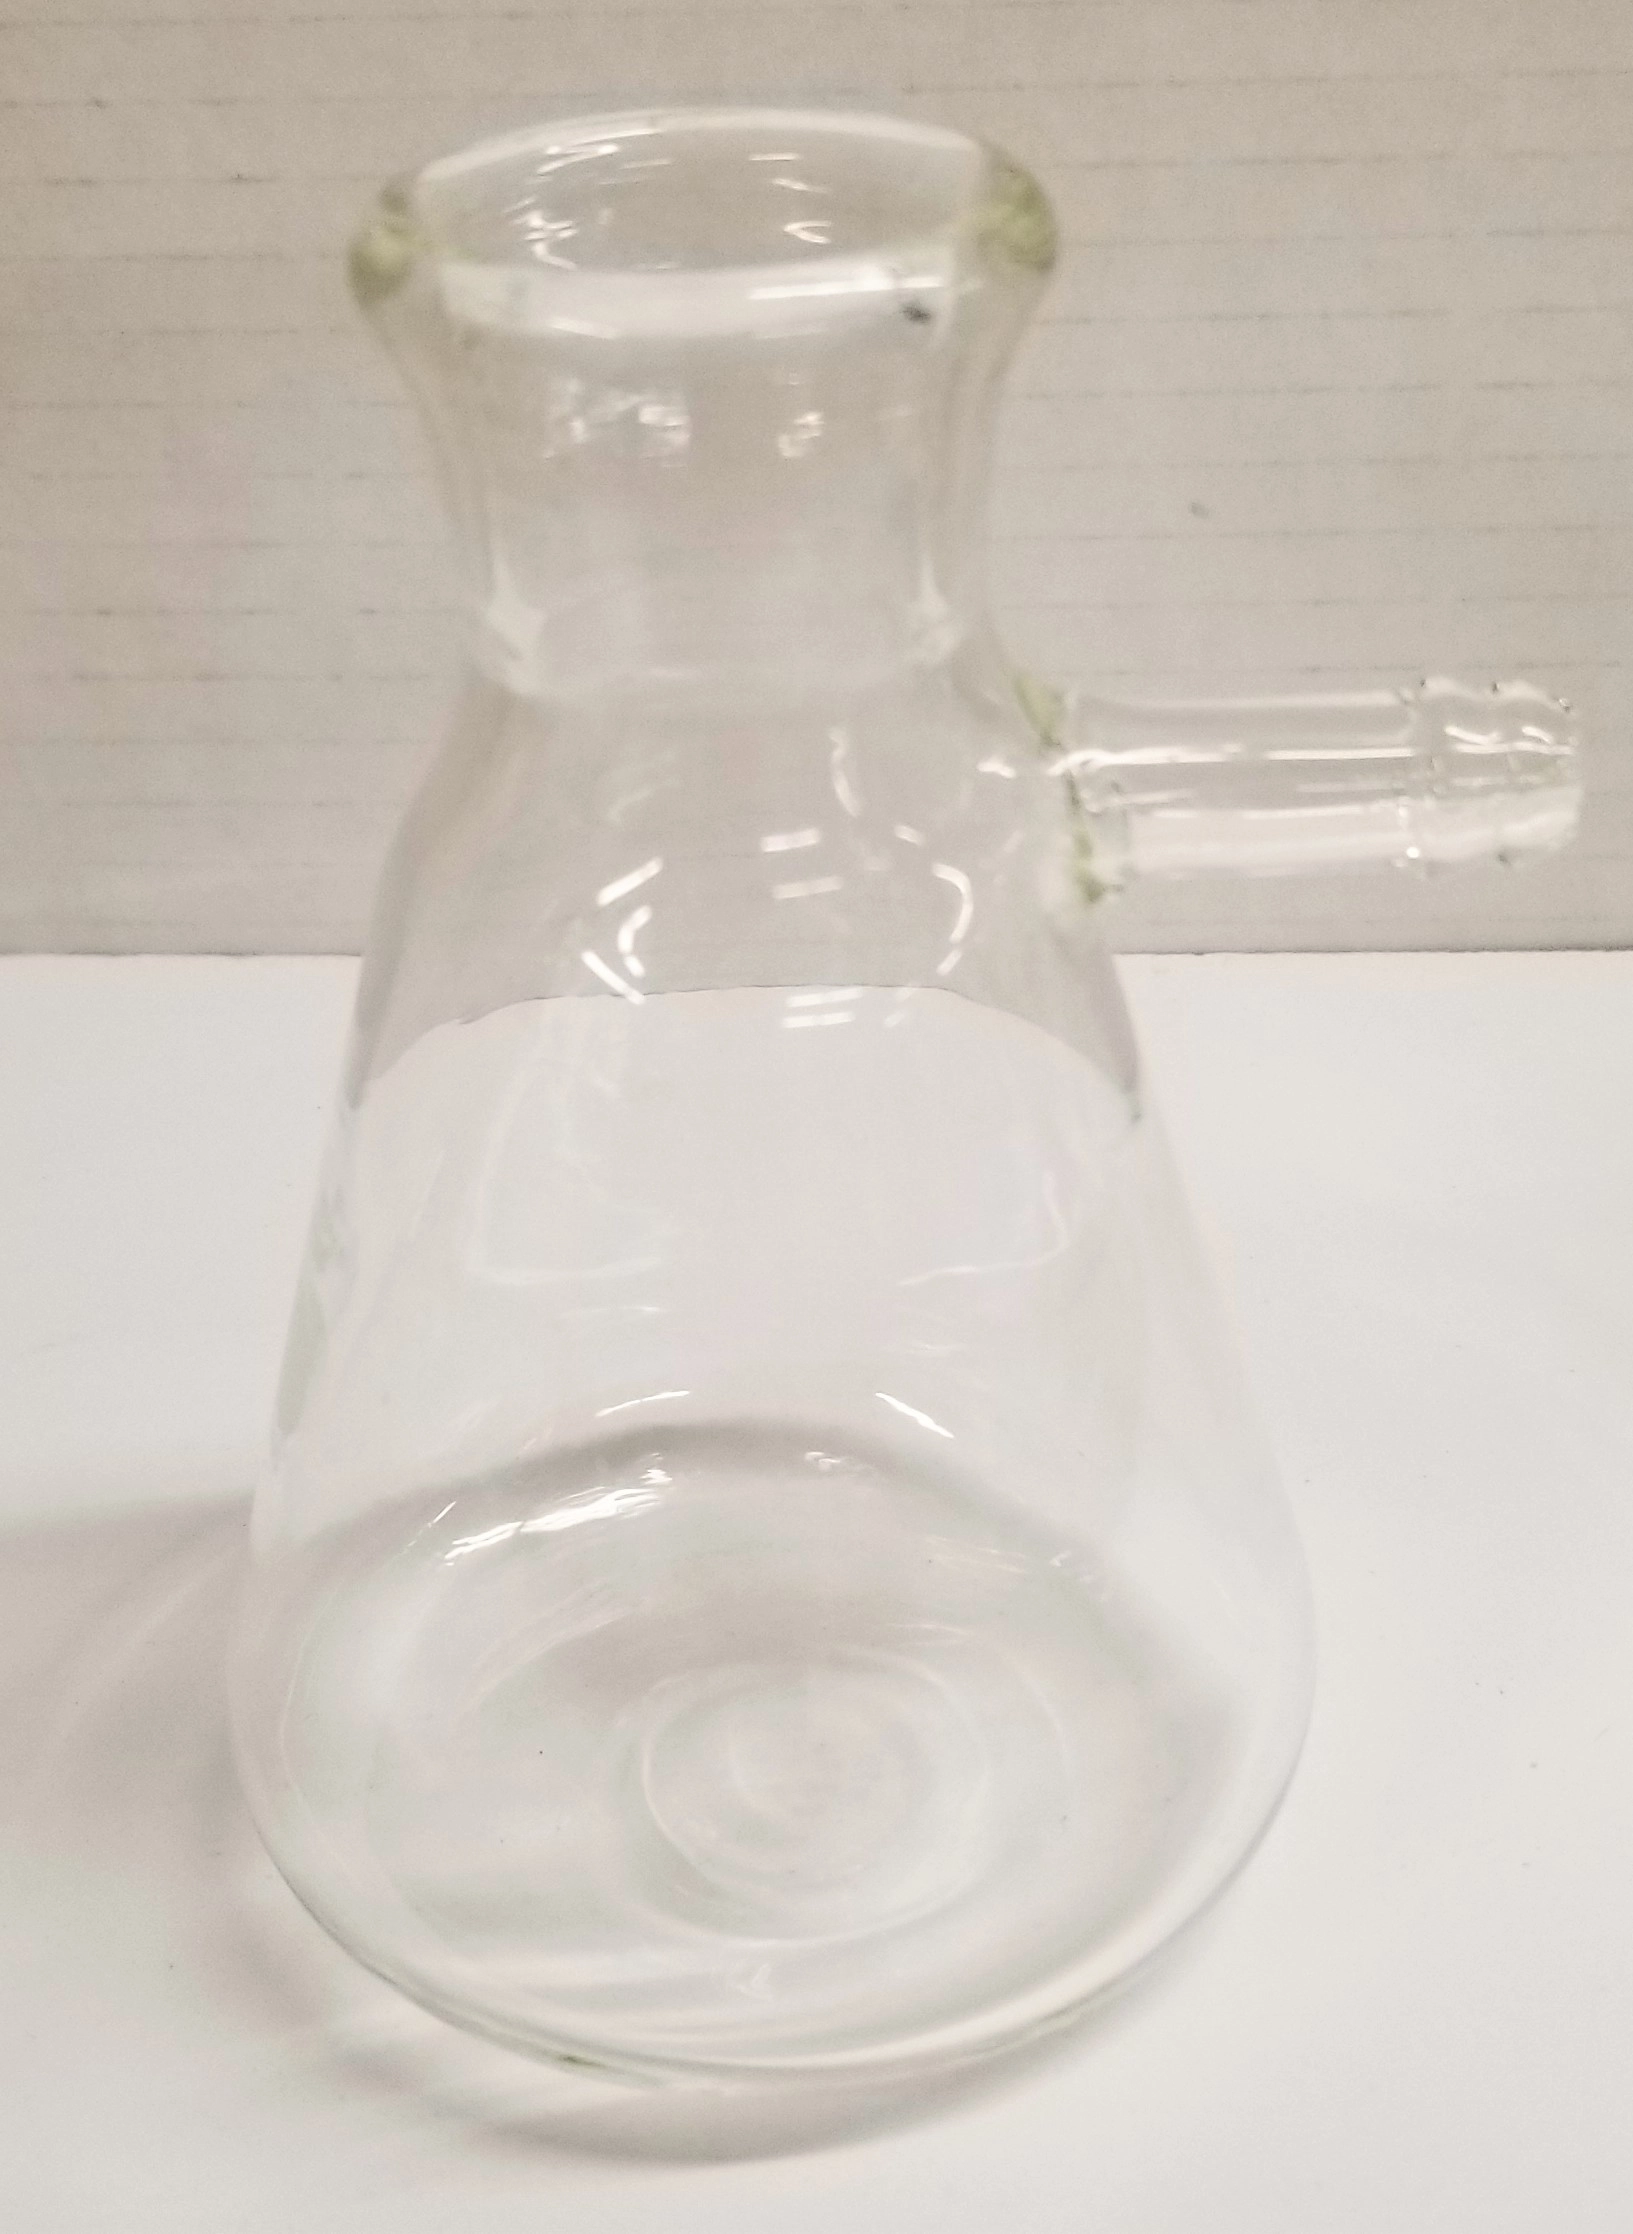 Corning PYREX 5360-125 Filtration Flask with Sidearm Tubulation - 125mL